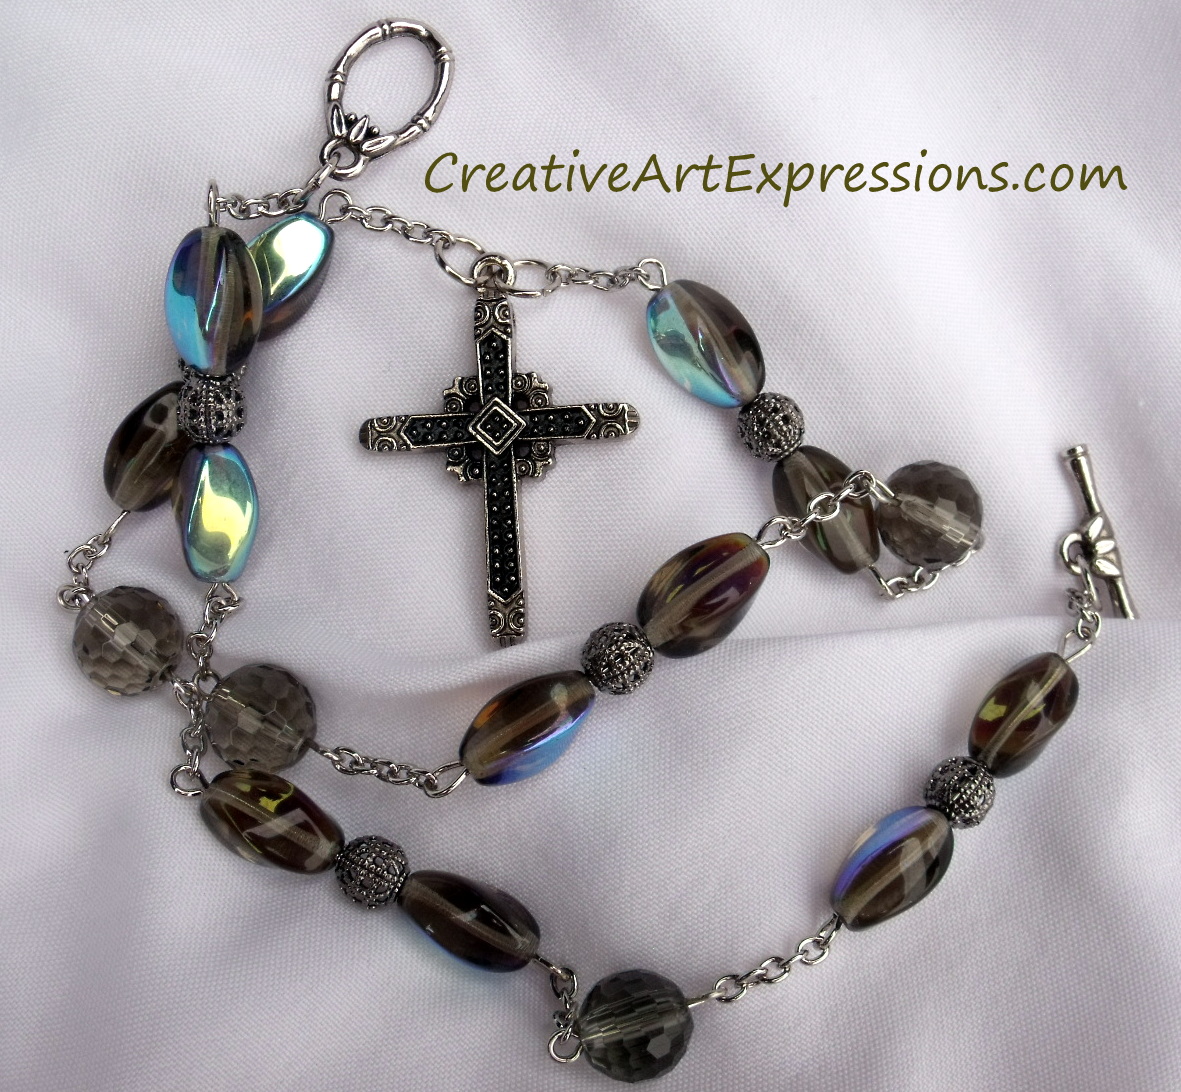 Creative Art Expressions Handmade Olive Prayer Beads Necklace Jewelry Design